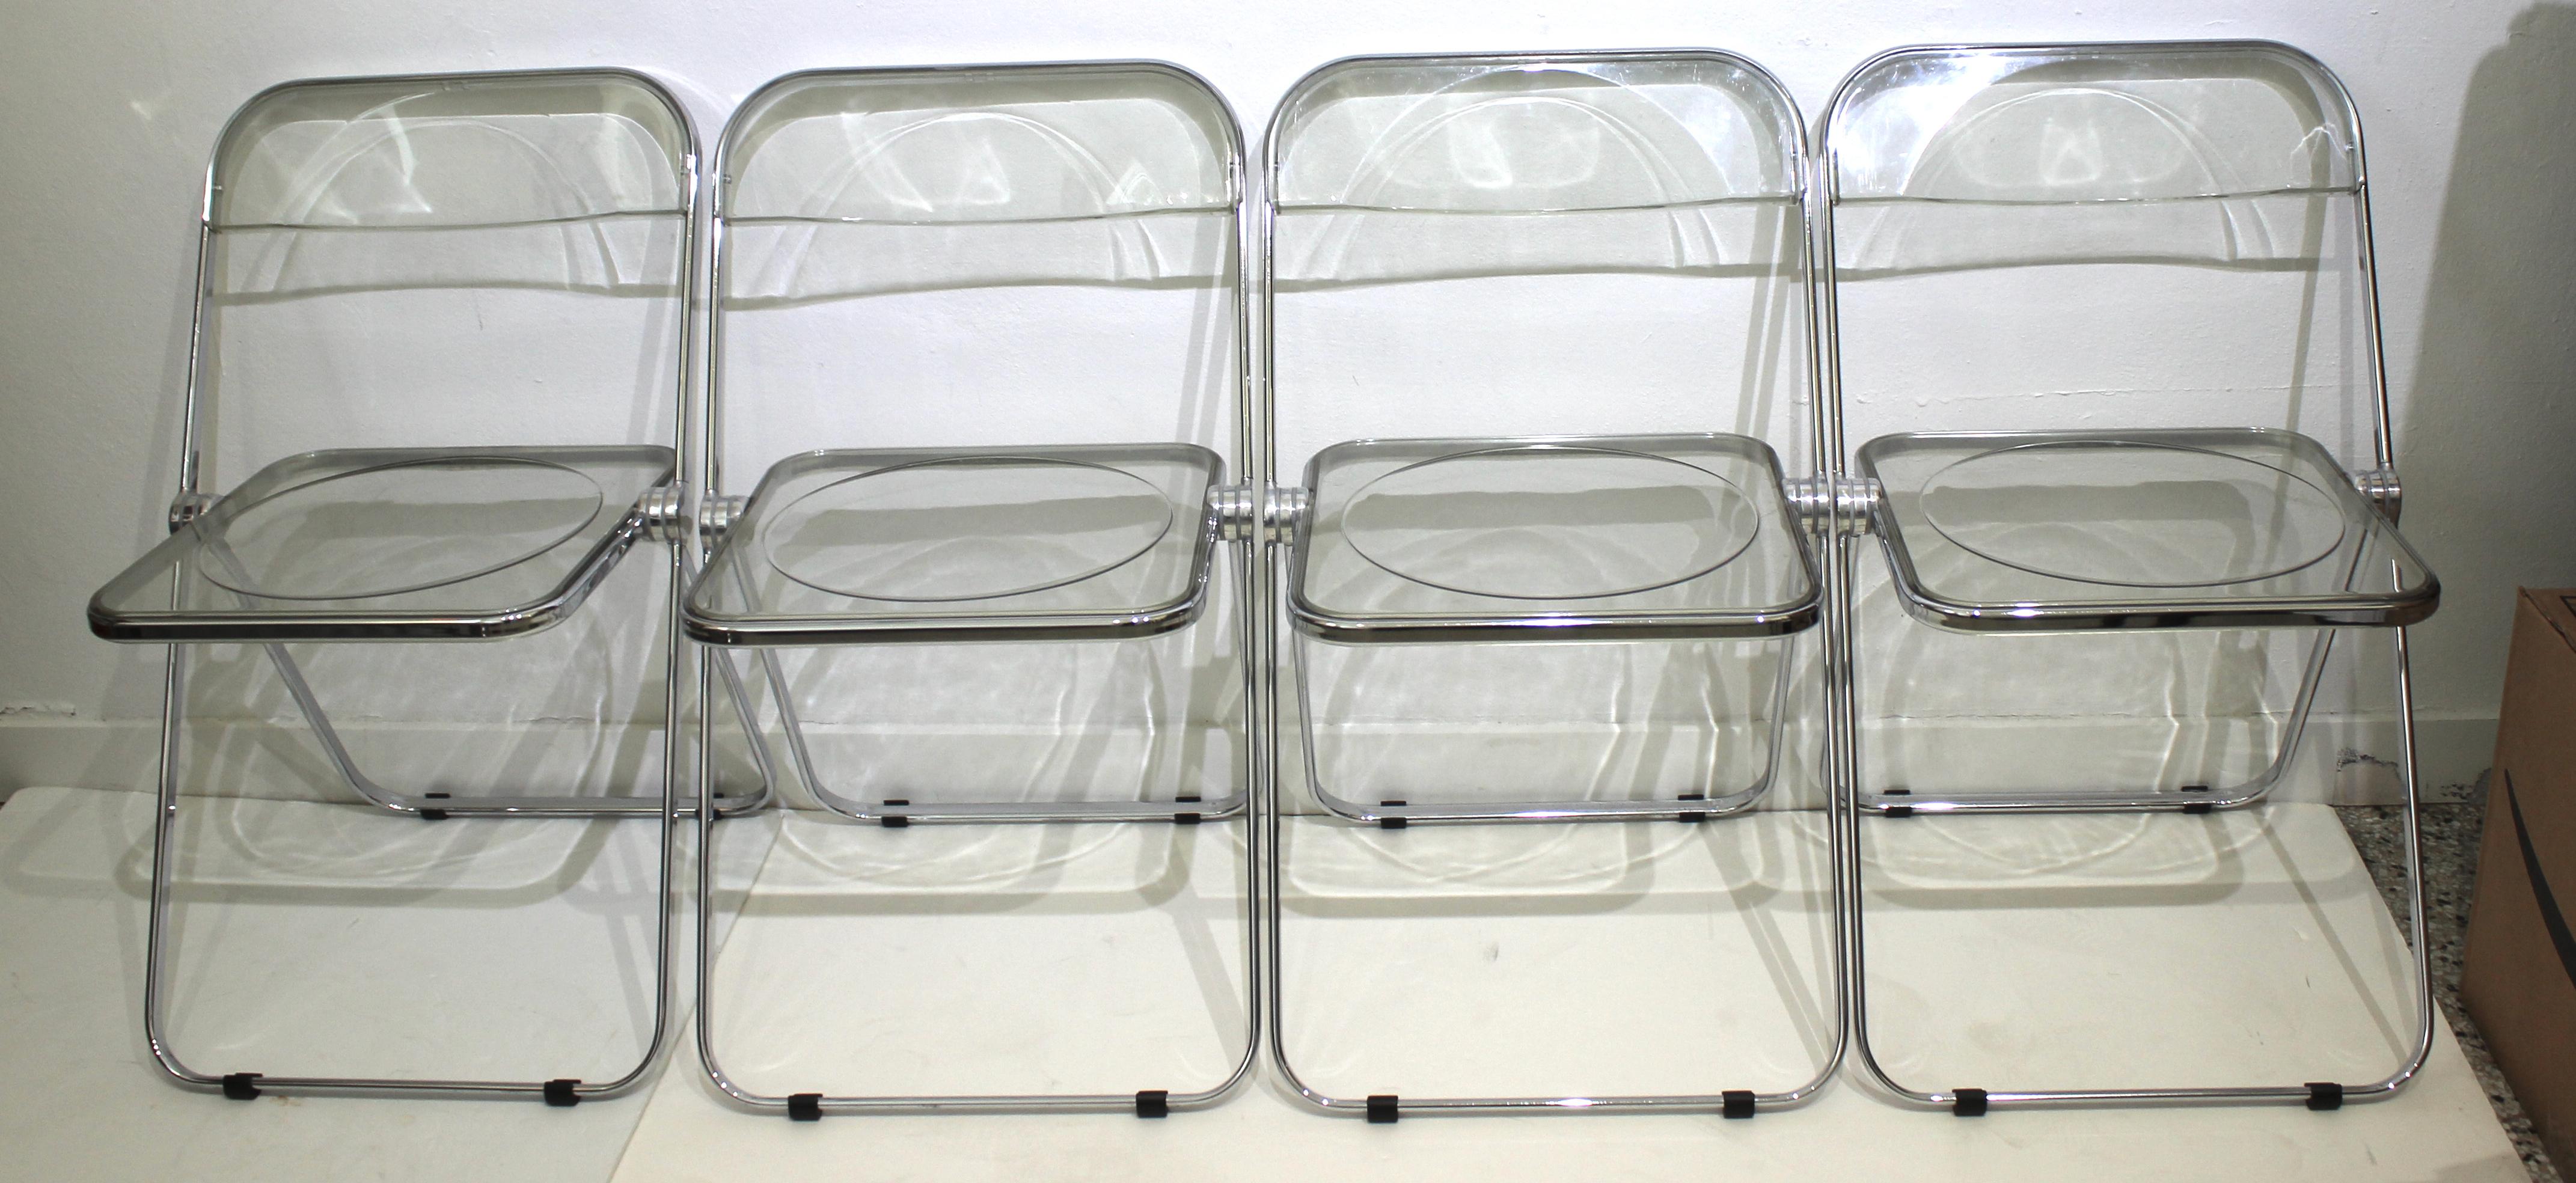 Modern Castelli Plia Folding Chairs, a Set of 4